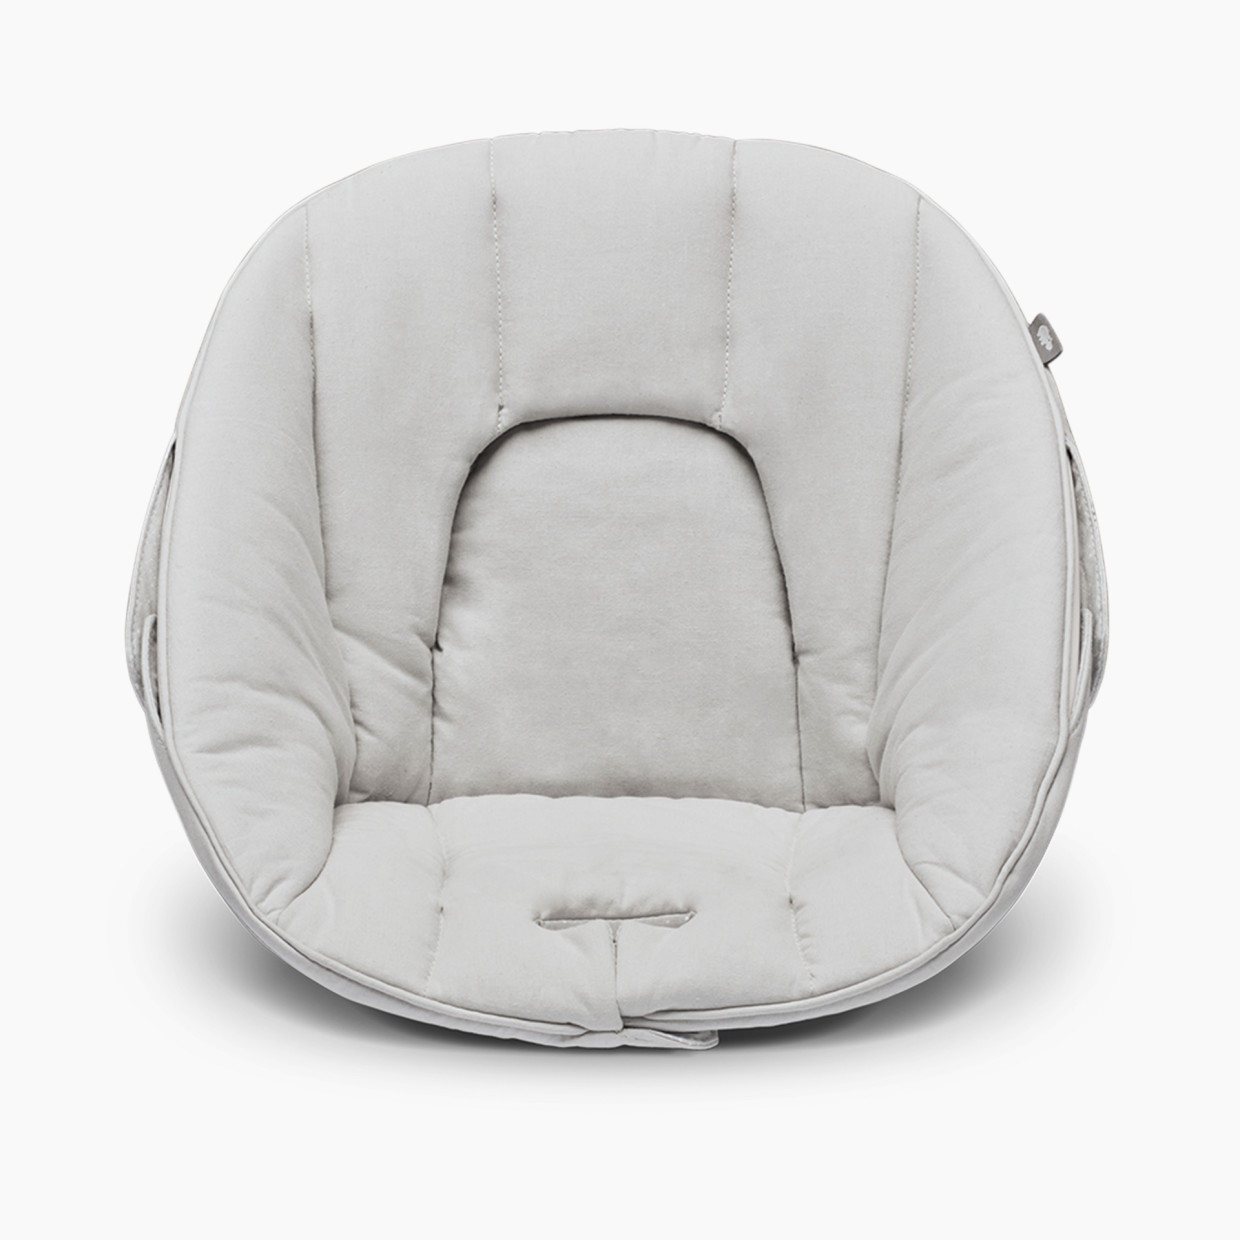 Lalo Chair Seat Cushion - Grey.